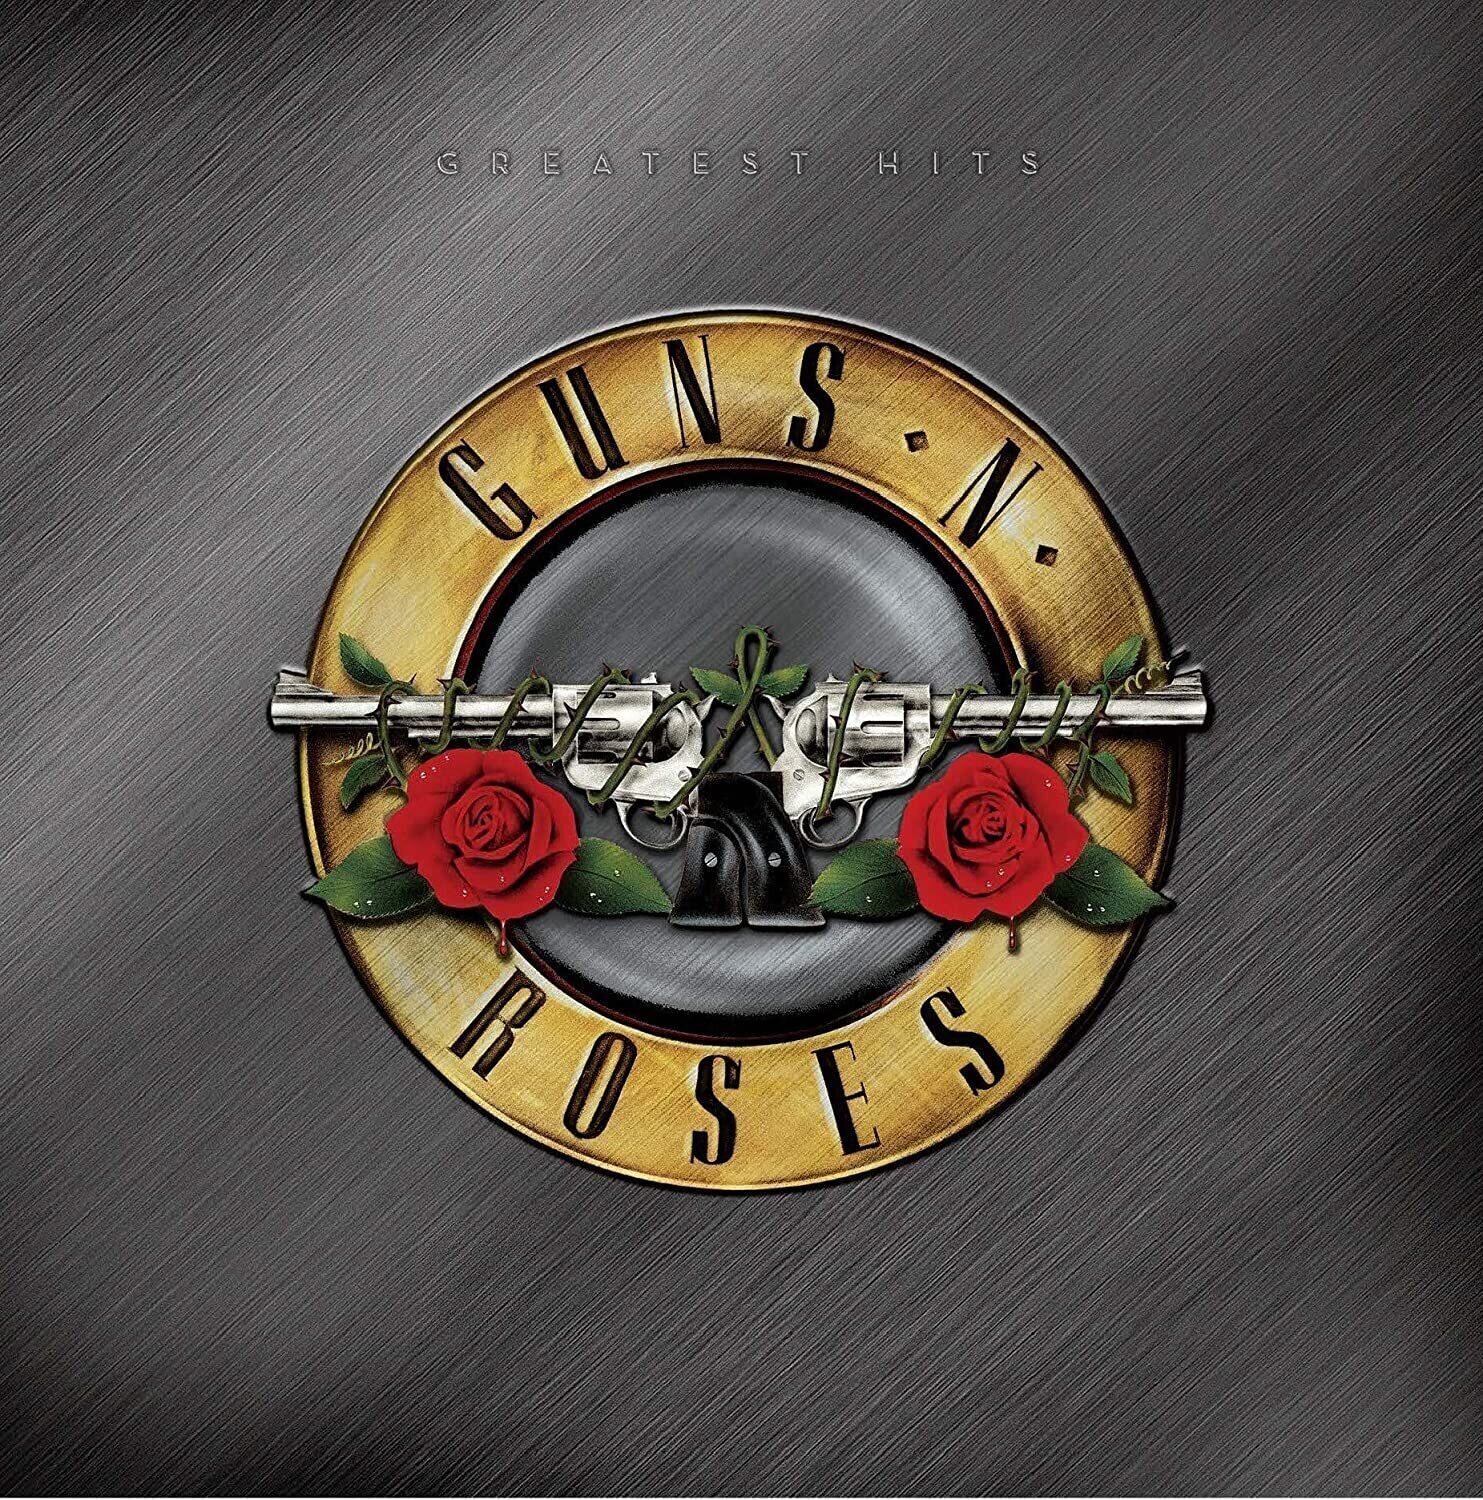 LP platňa Guns N' Roses - Greatest Hits (2 LP) (180g)